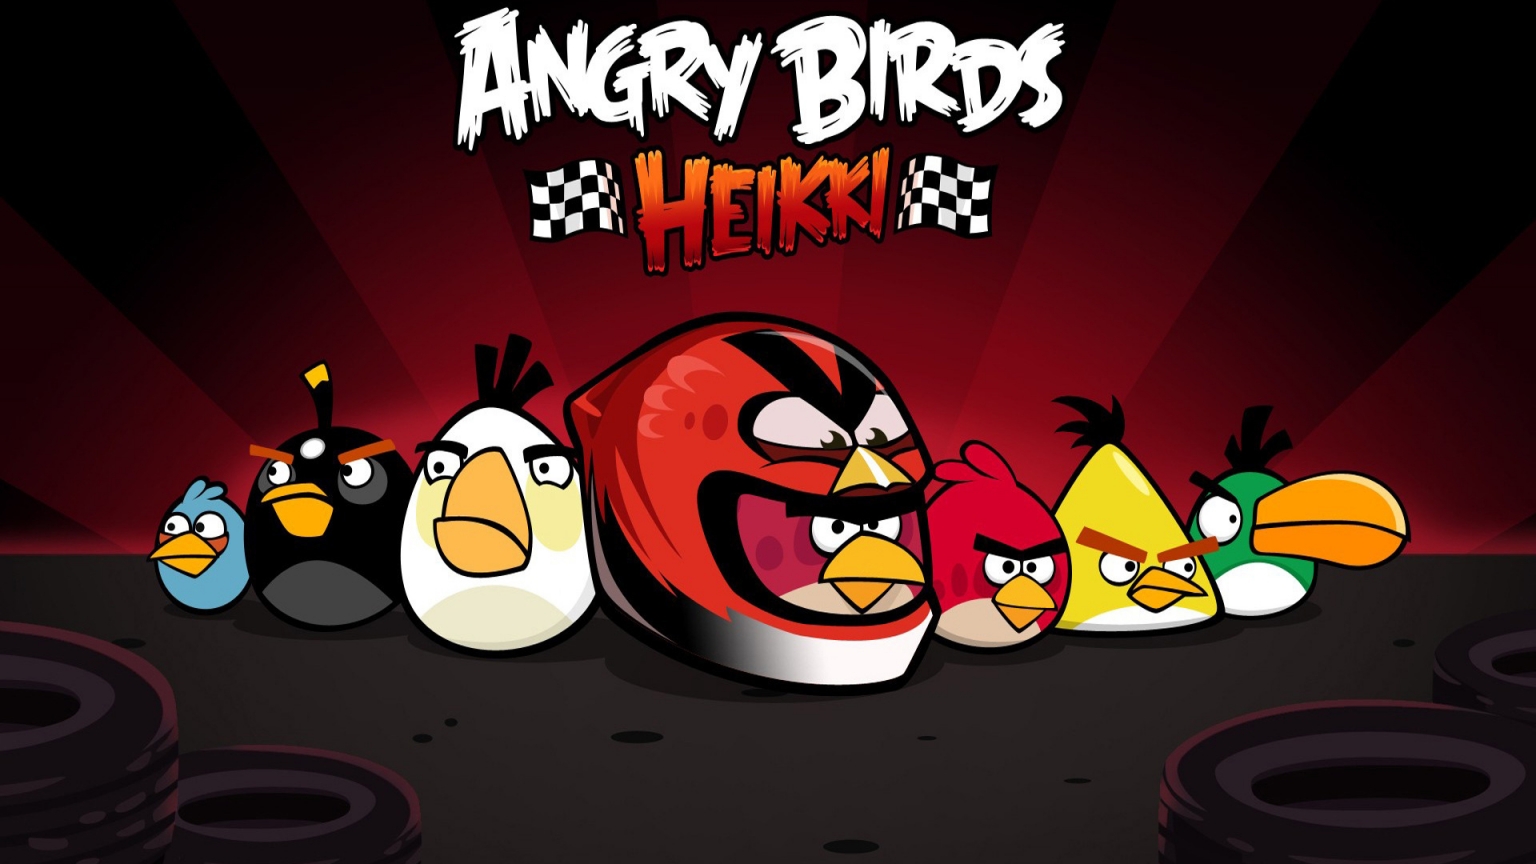 Angry Birds Heikki for 1536 x 864 HDTV resolution